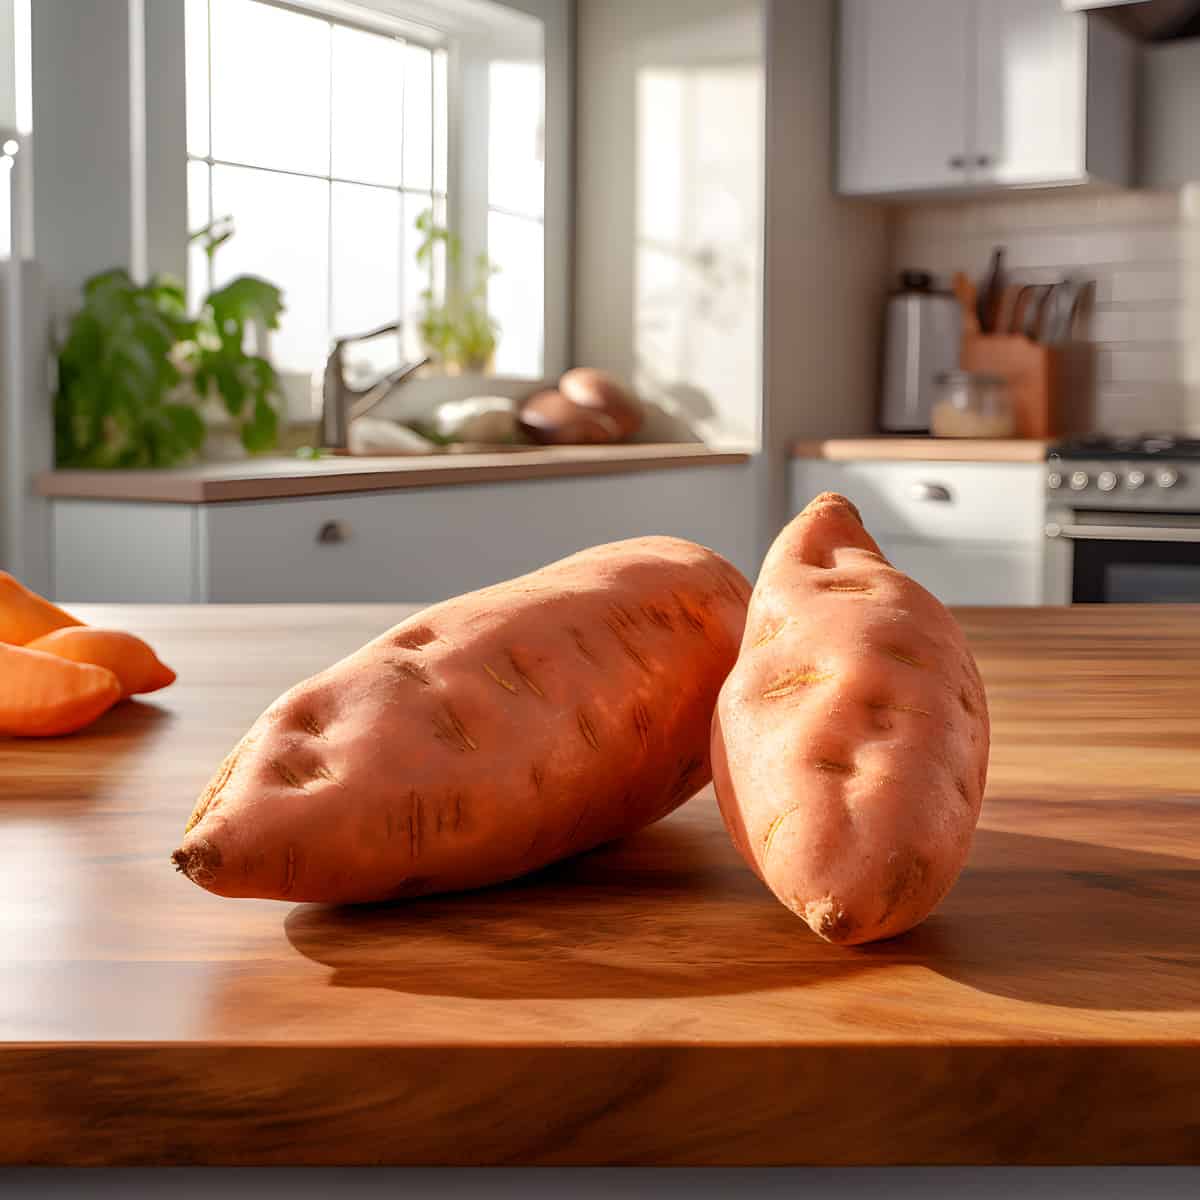 Vardaman Sweet Potatoes on a kitchen counter